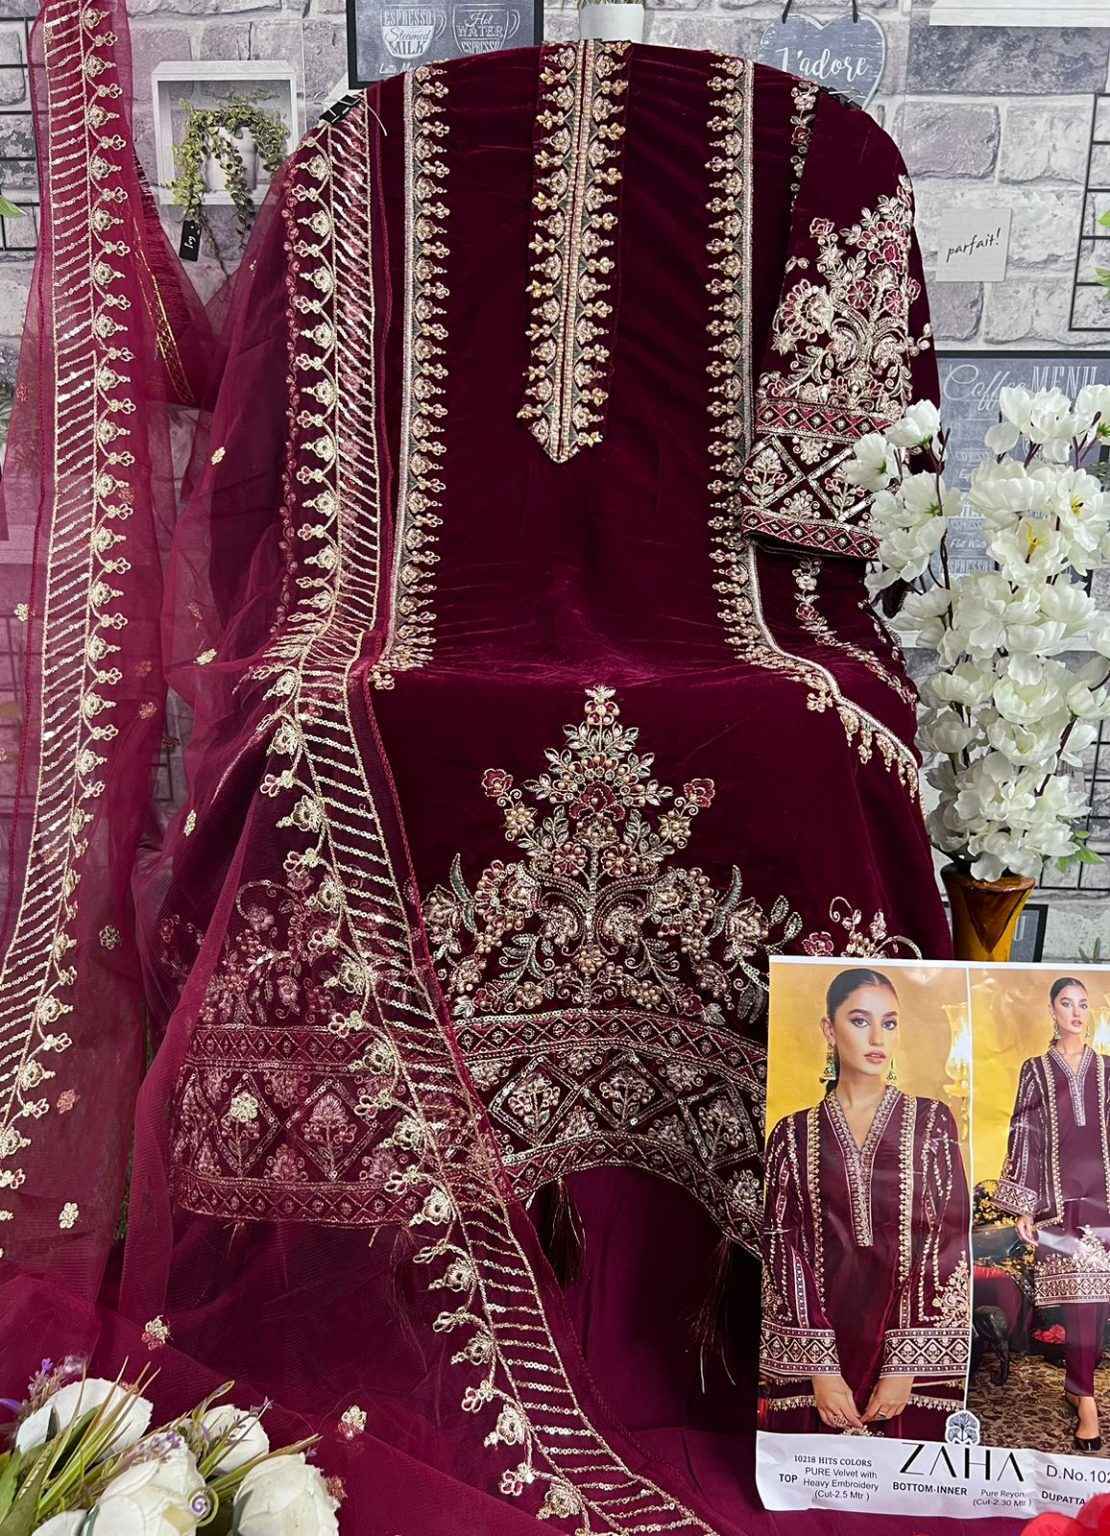 Zaha Aafiya Vol 2 Velvet Dress Material 4 pcs Catalogue - Wholesale Factory